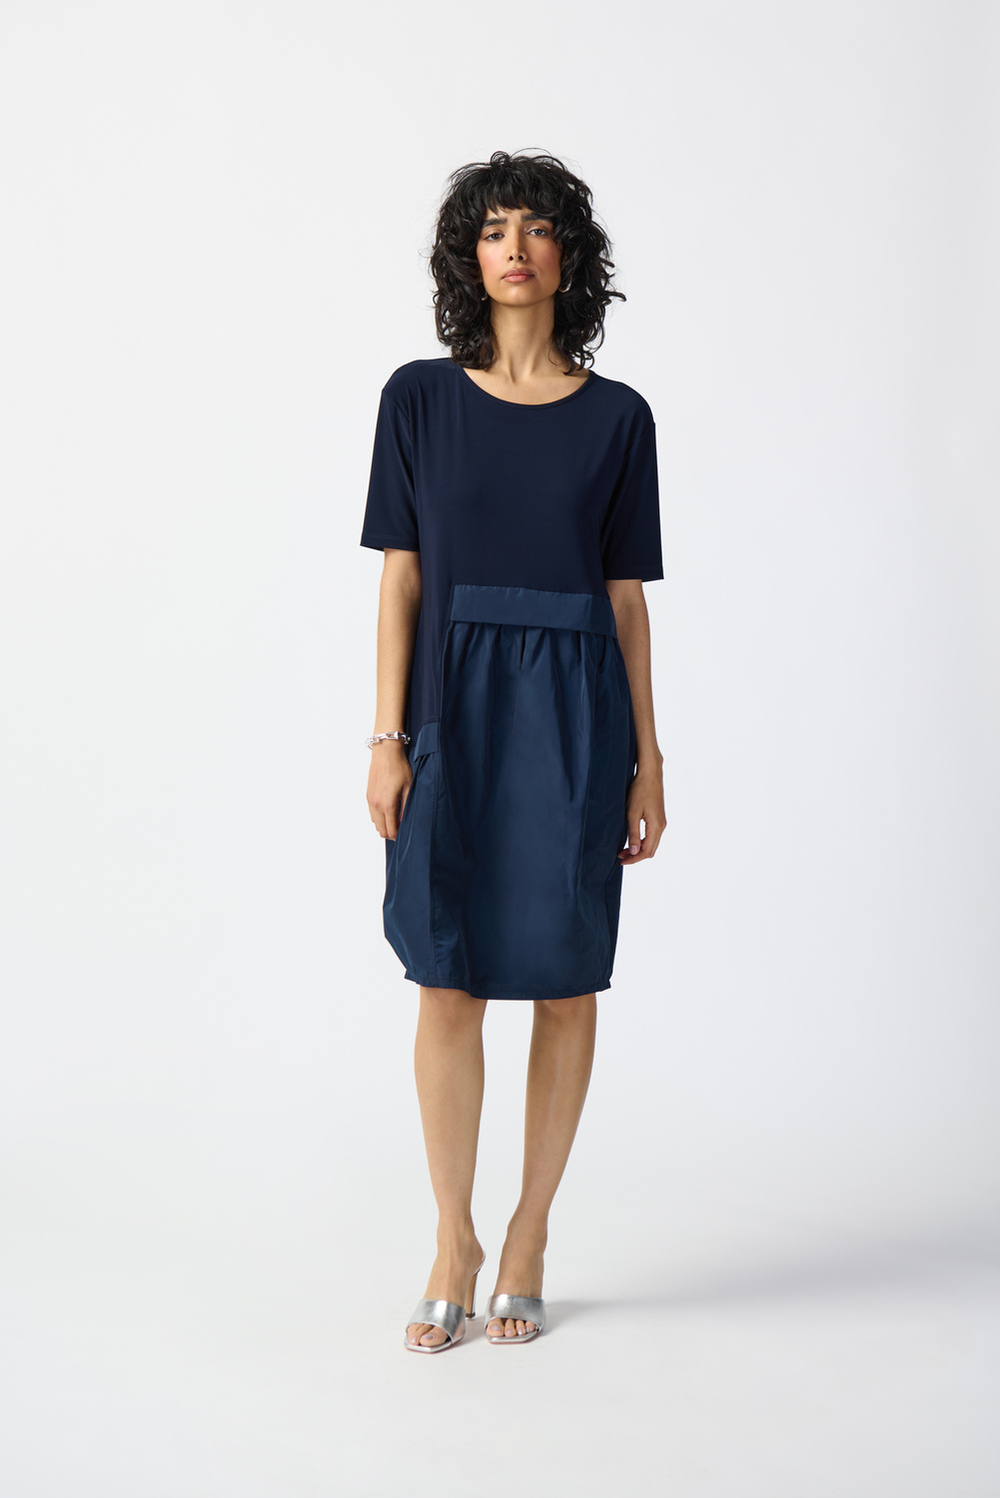 Two-Tone Voluminous Dress Style 241049. Midnight Blue